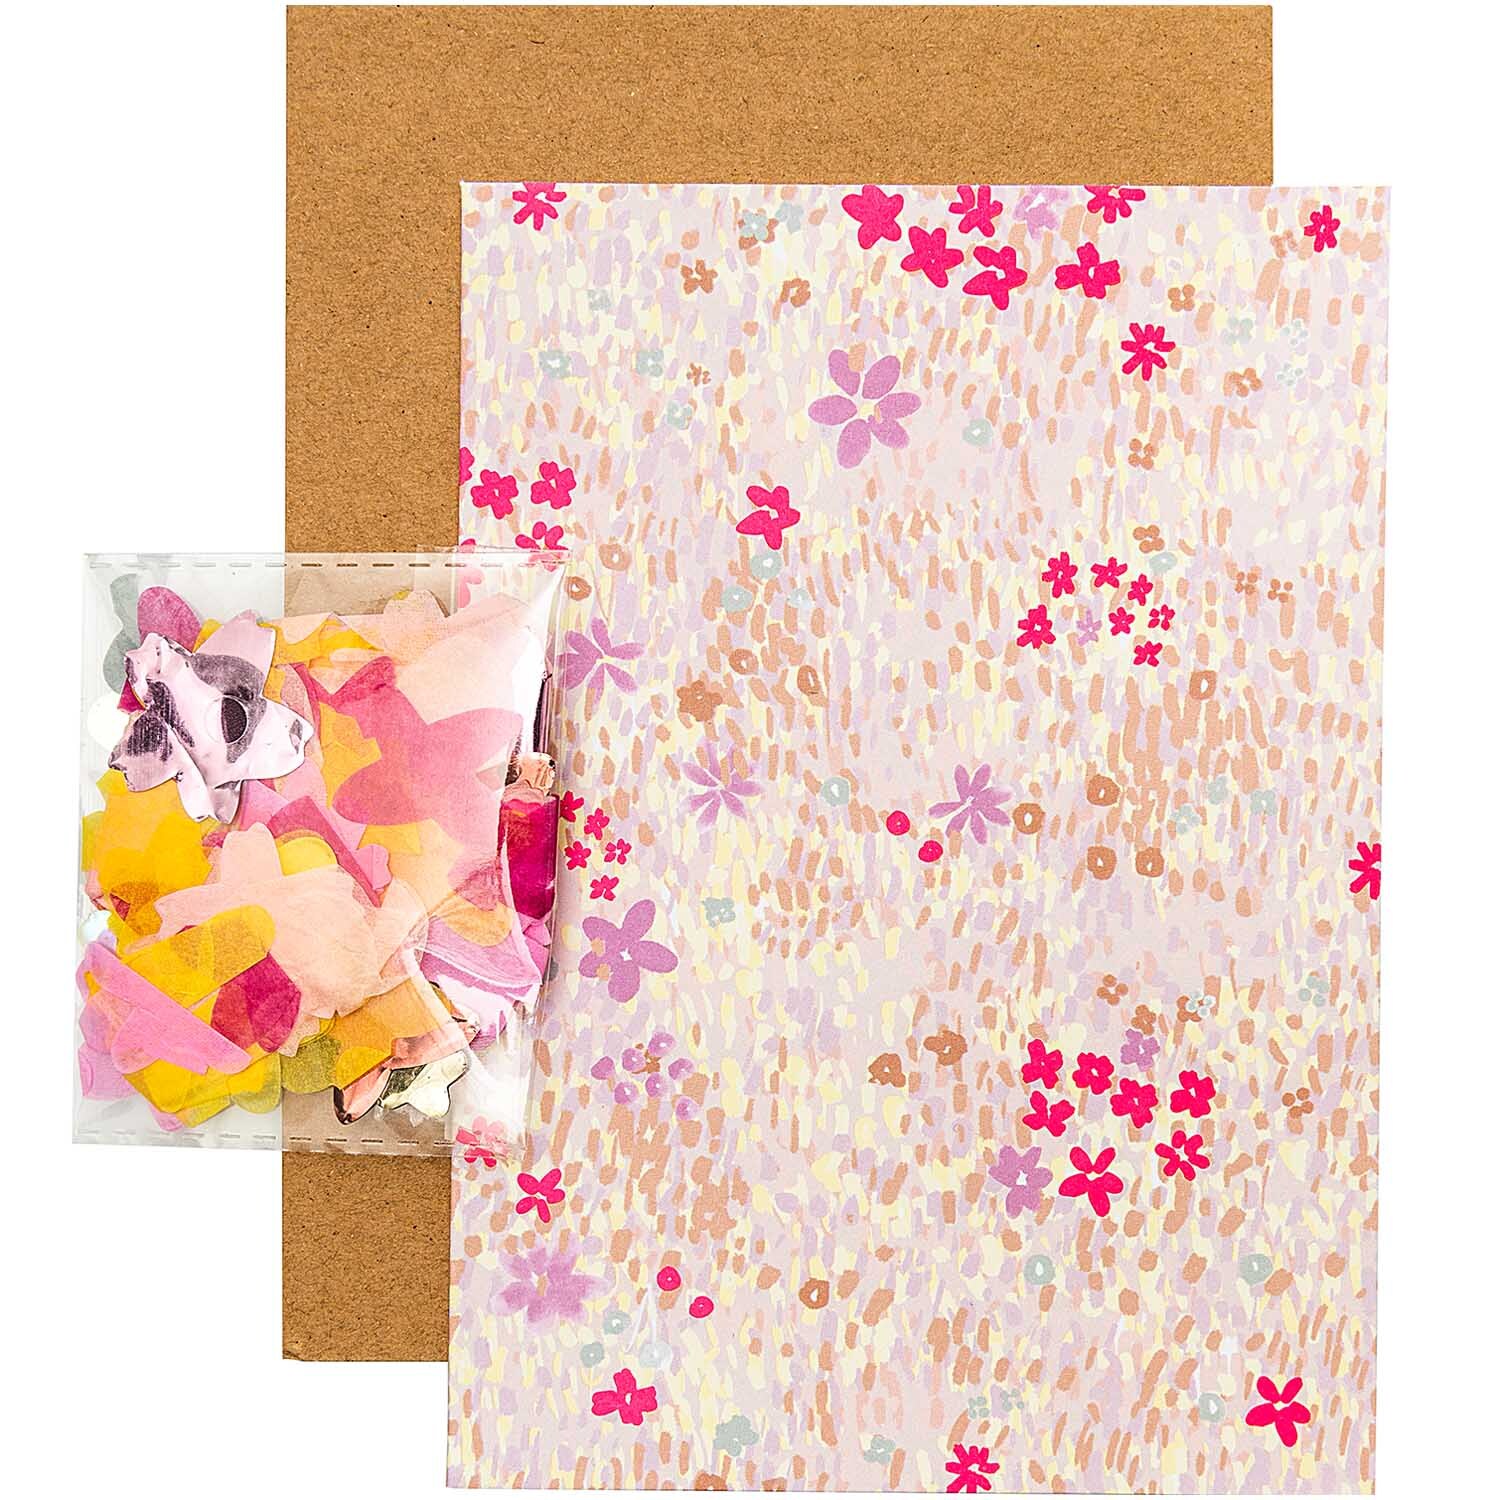 Paper Poetry Grußkartenset Crafted Nature Blumenwiese rosa